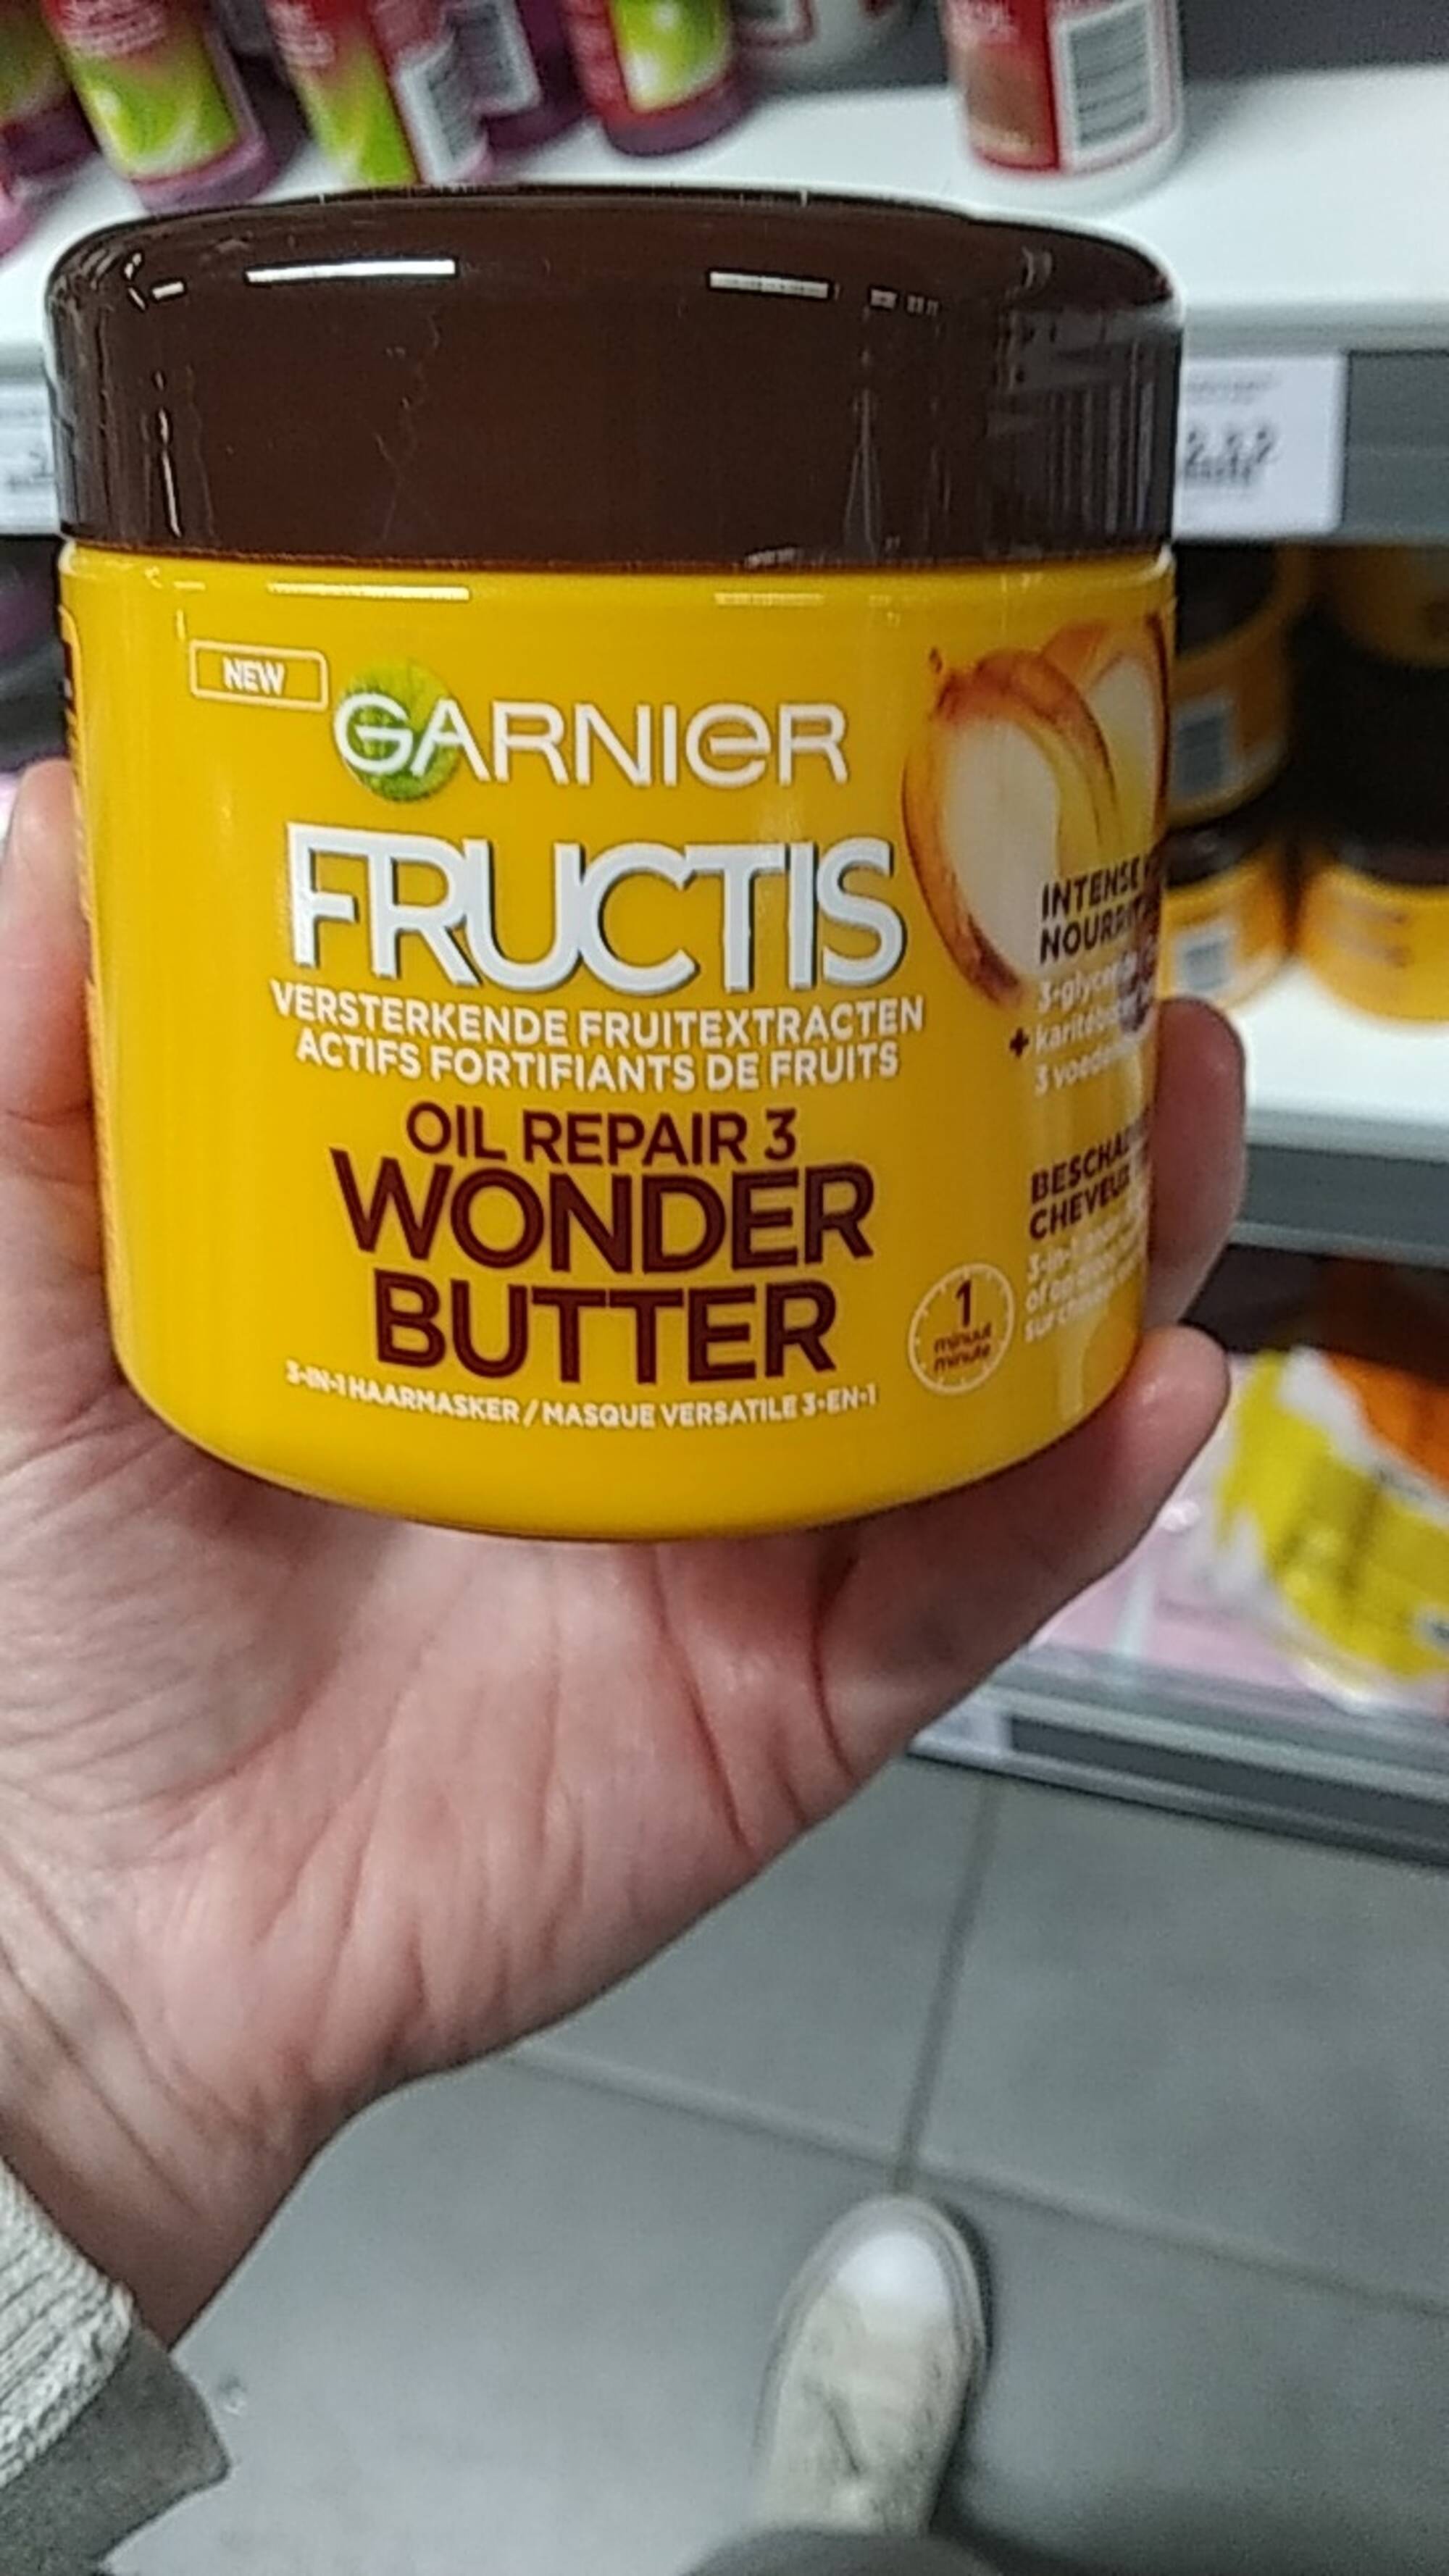 GARNIER - Fructis - Oil repair 3 wonder butter